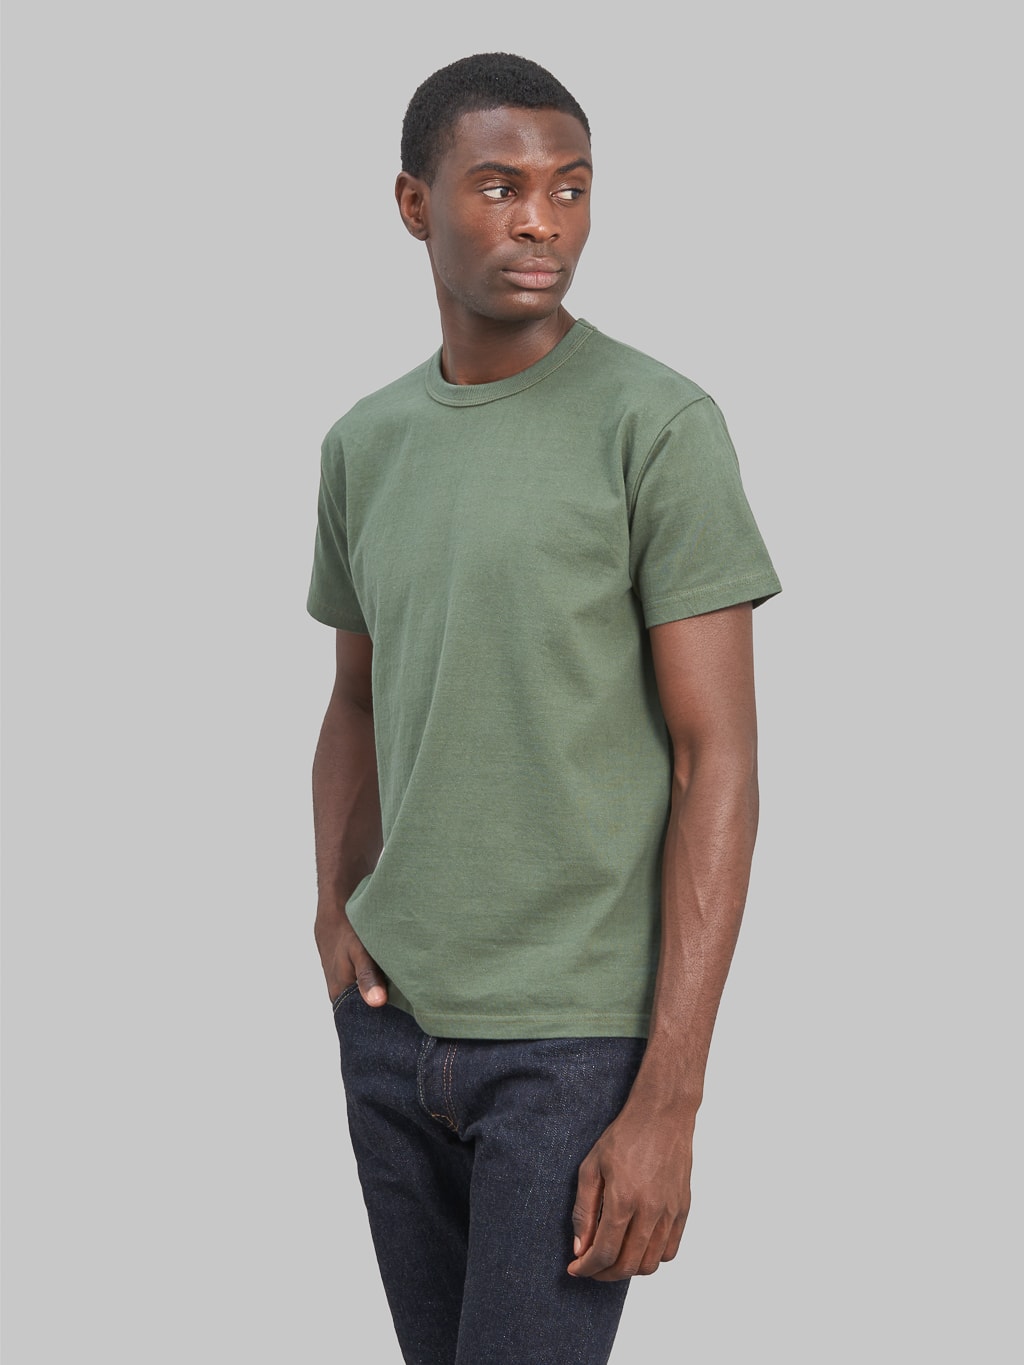 samurai jeans solid plain heavyweight tshirt moss green loopwheeled look